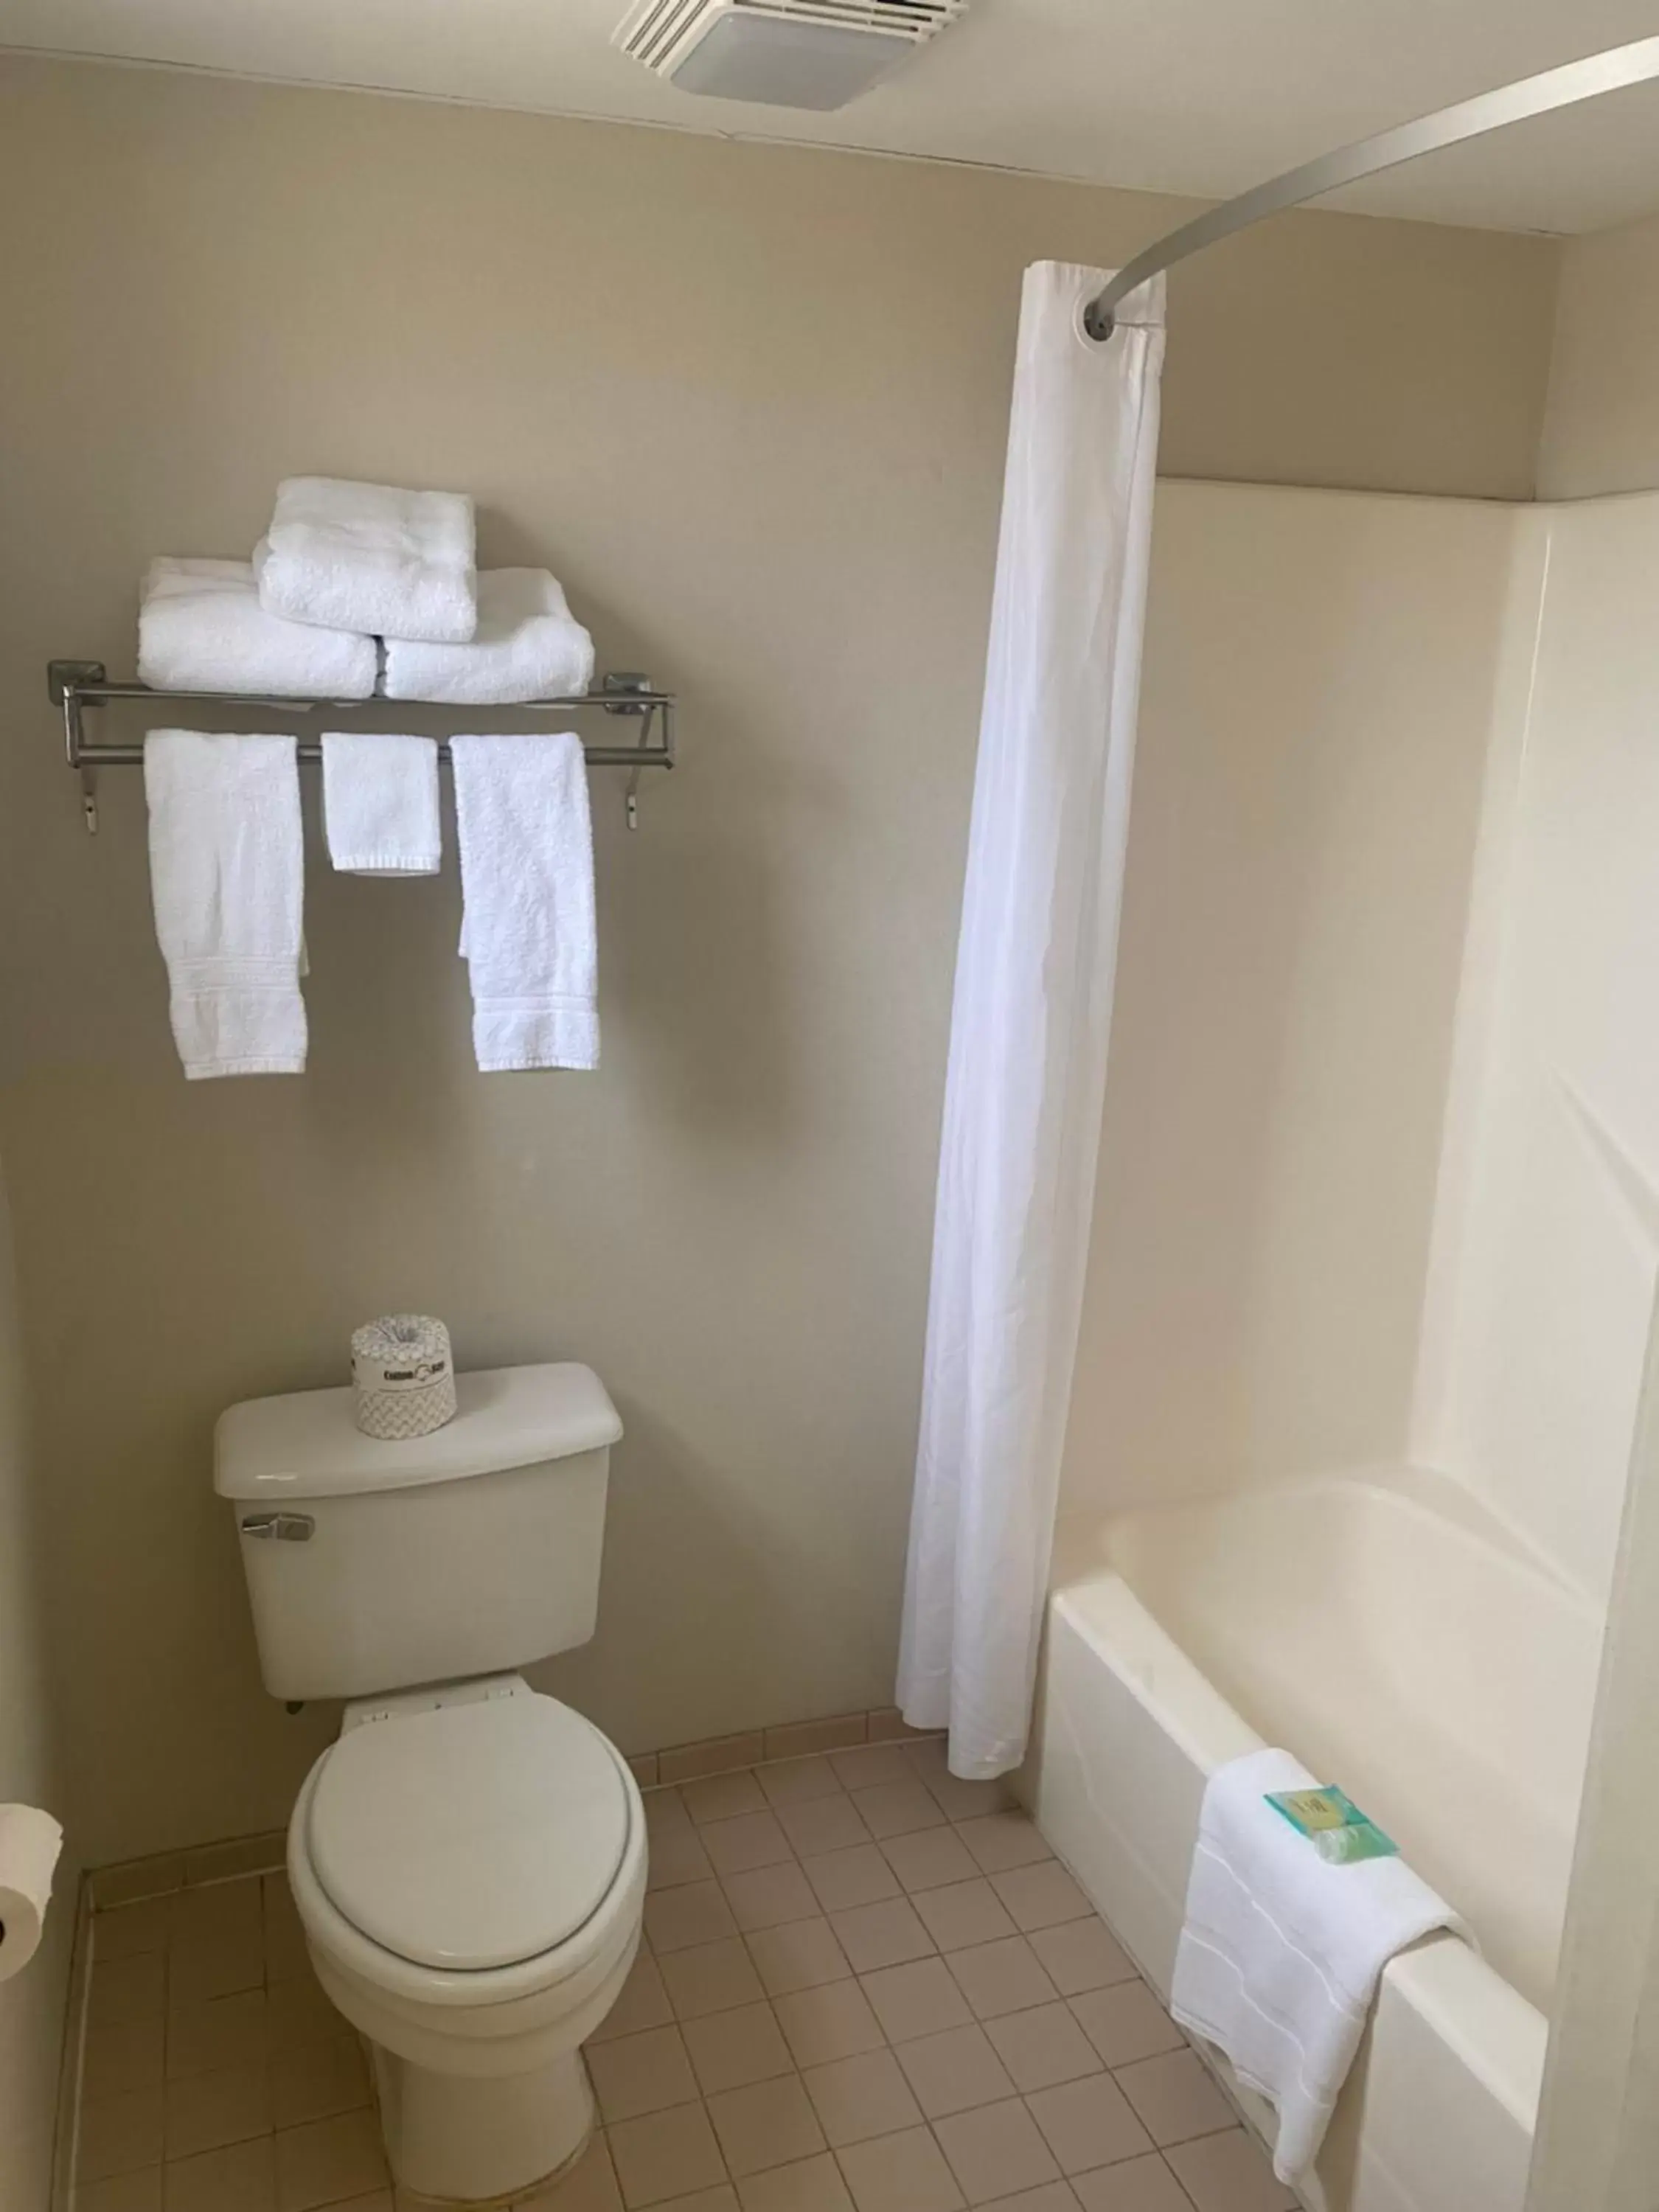 Toilet, Bathroom in Welcome Inn